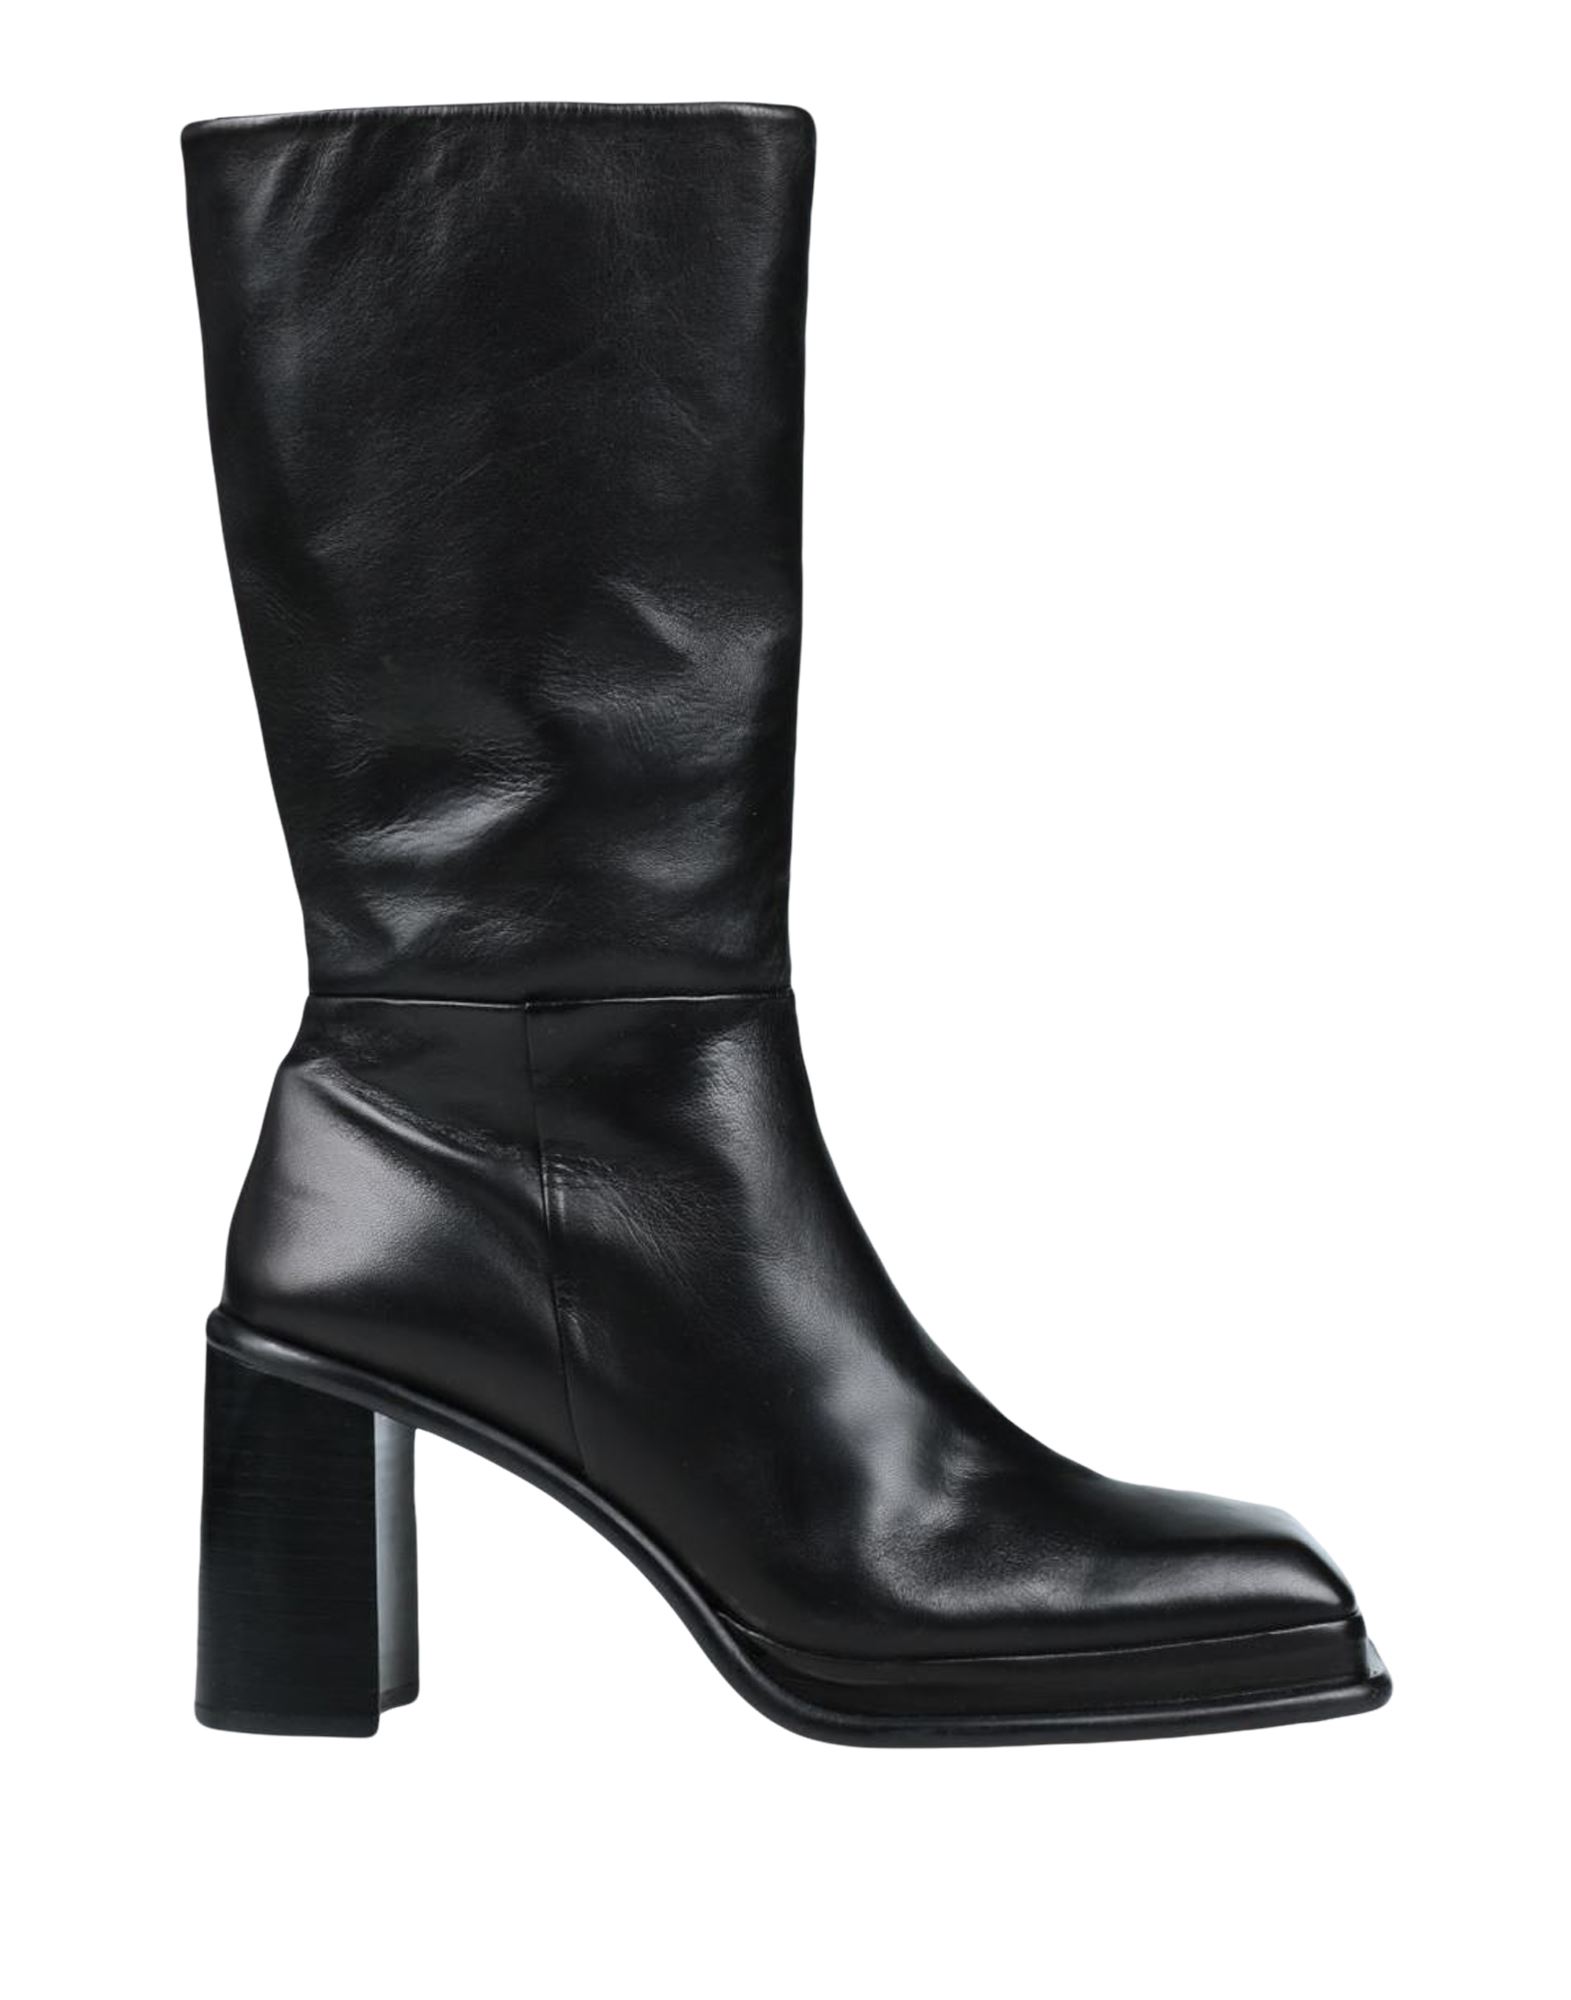 Miista Abril Black Woman Boot Black Size 10.5 Sheepskin